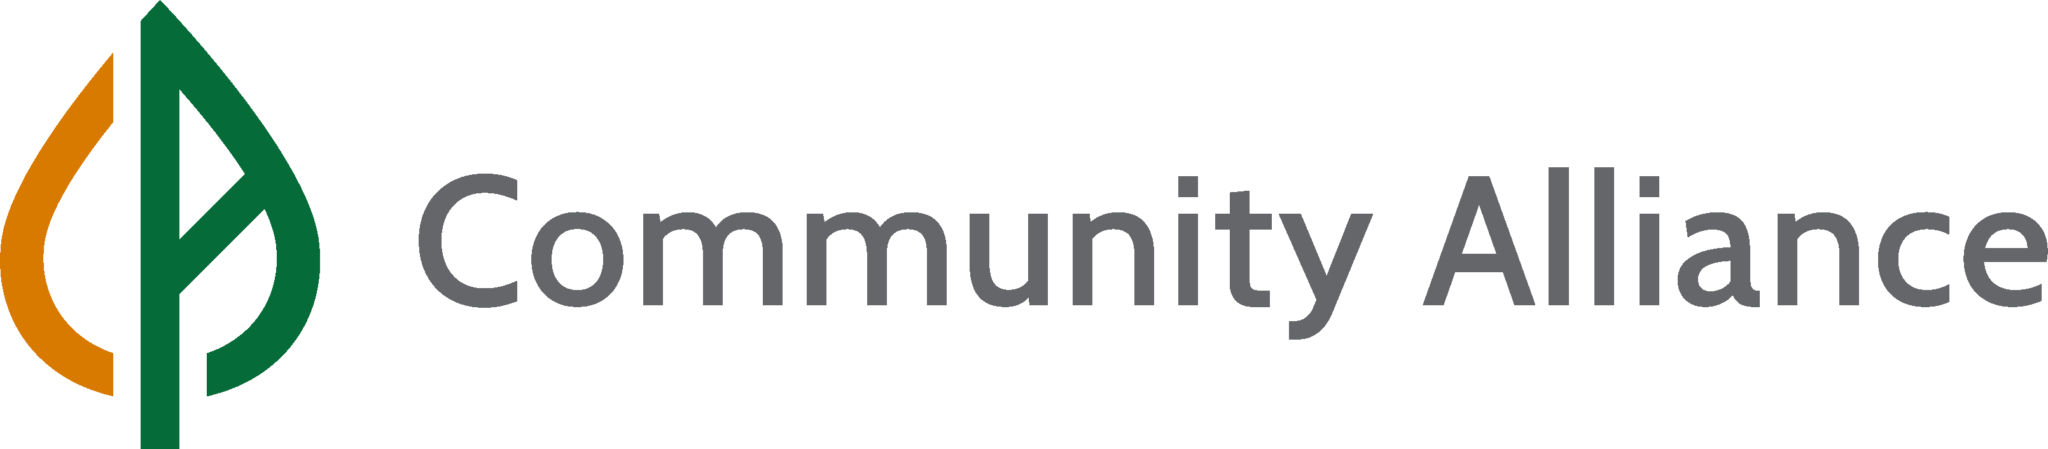 Community Alliance logo